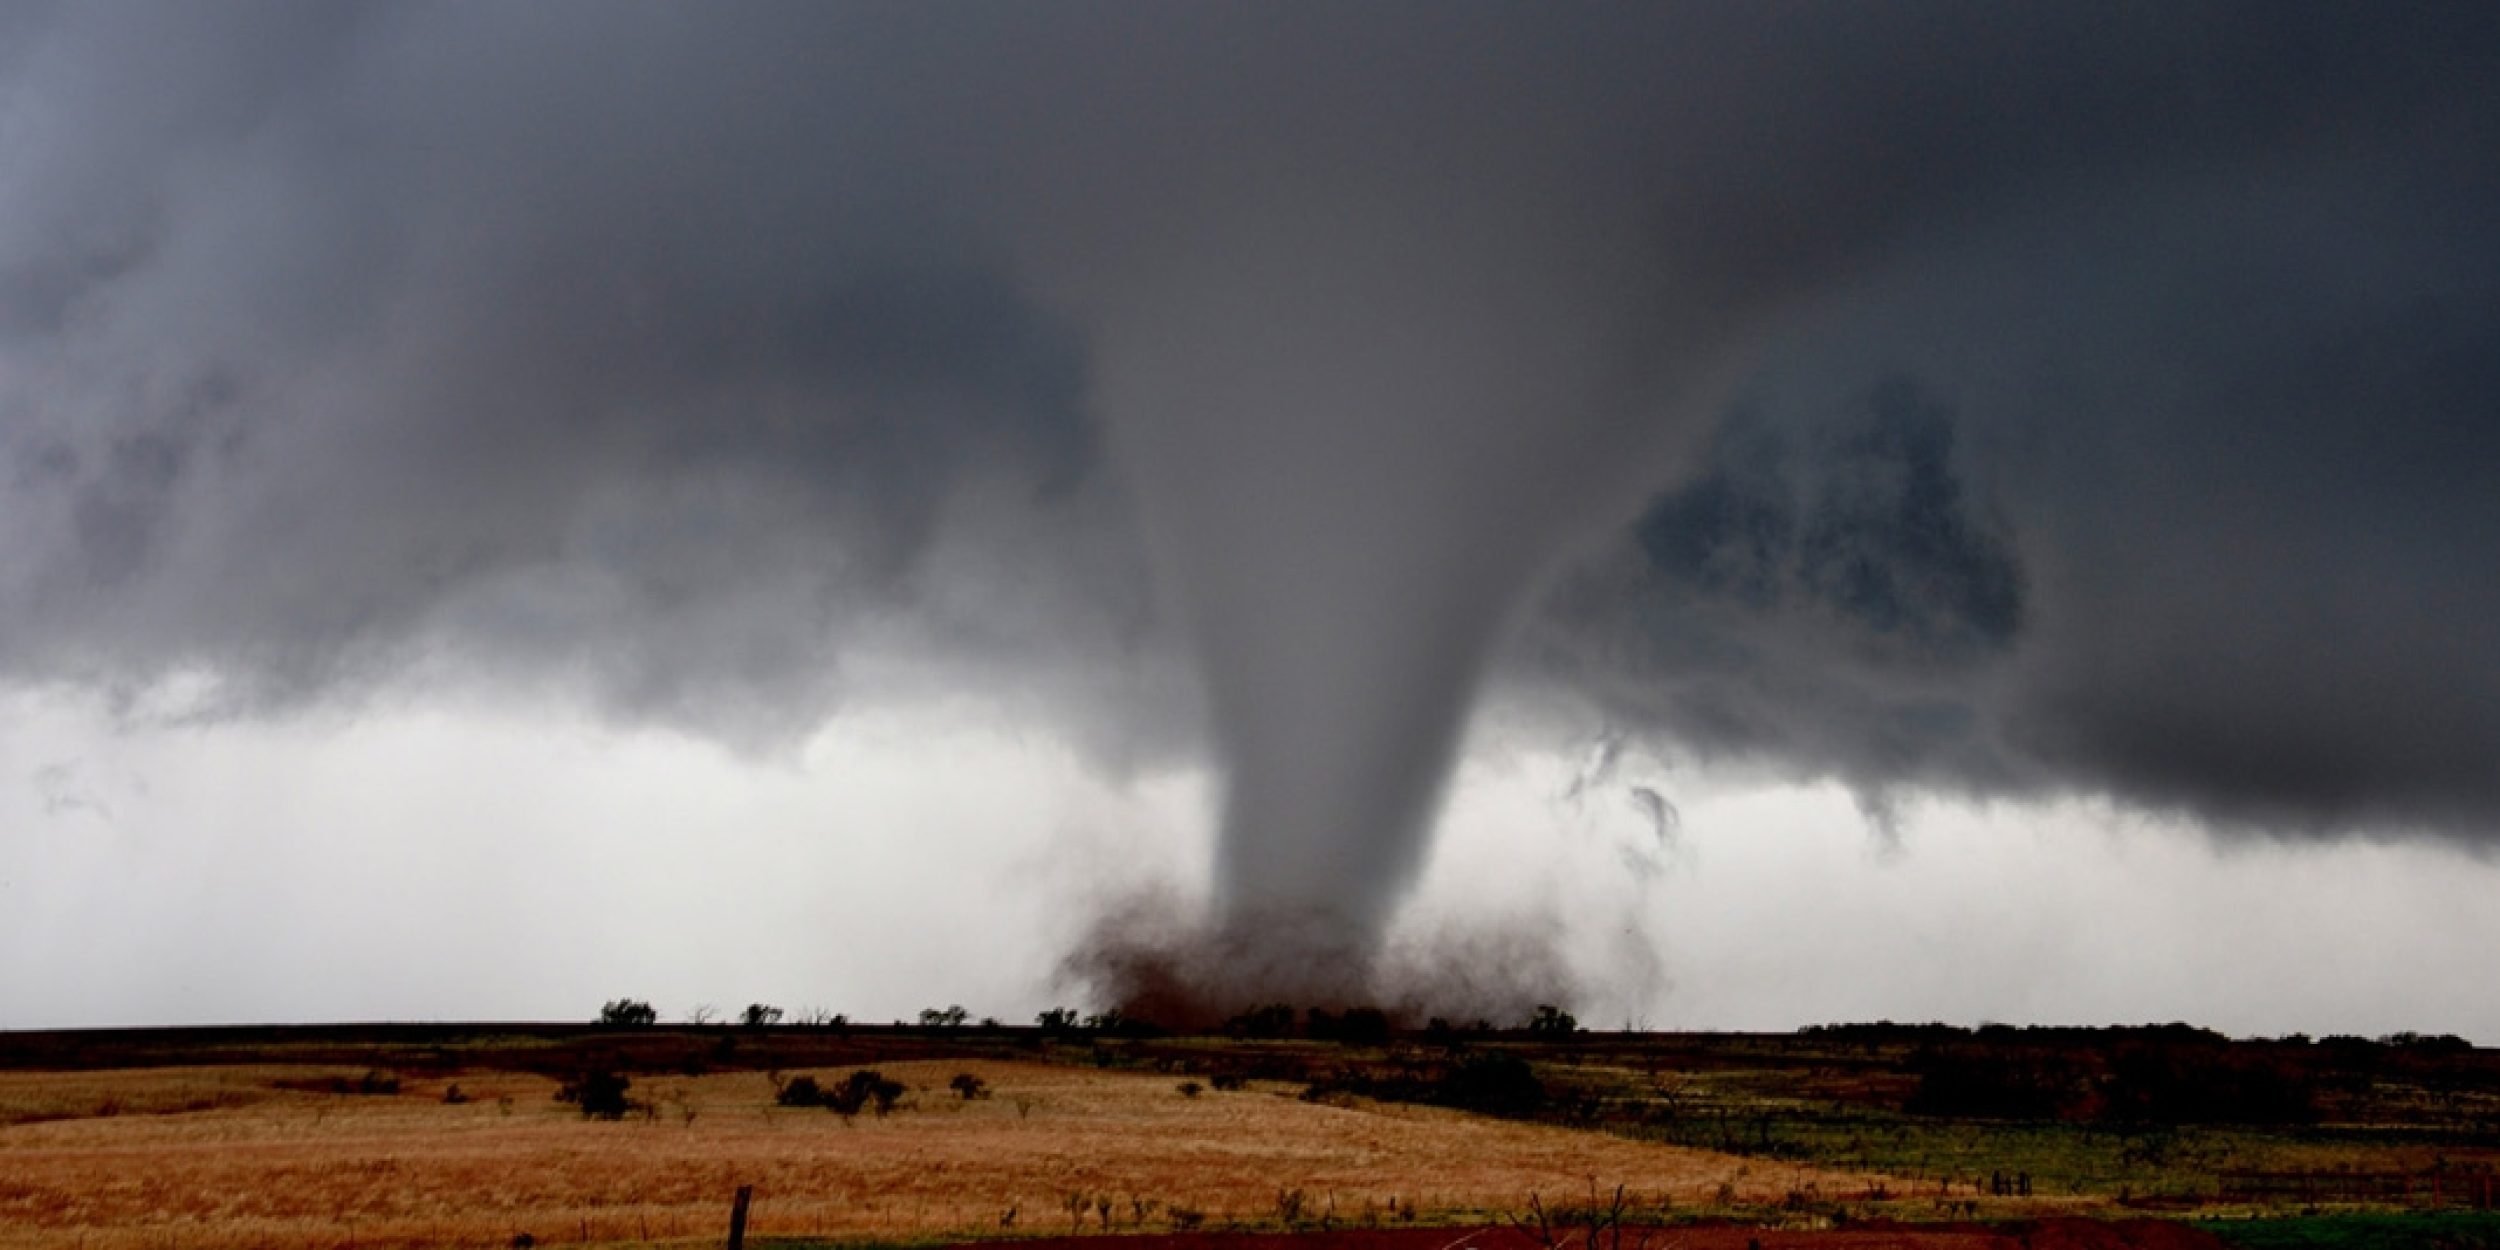 img-PHOTO-tornado-Manitou-Oklahoma-Chris-Spannagle-1120x534-110711-landscape